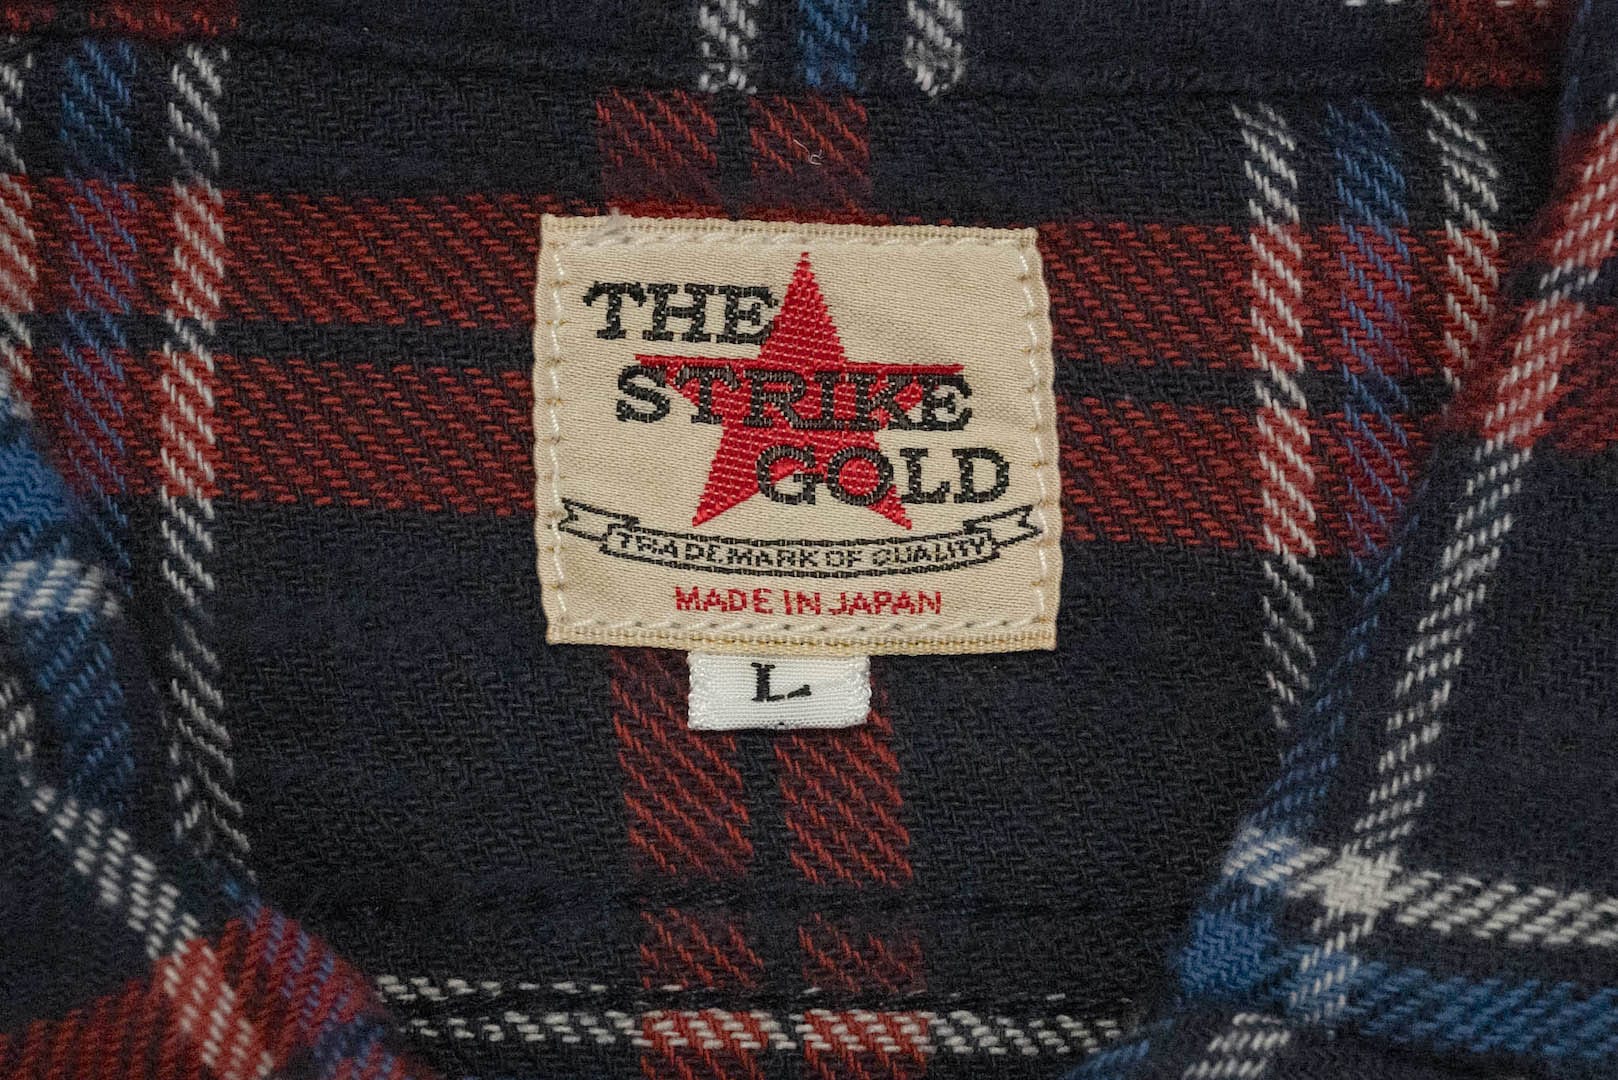 The Strike Gold 11oz Tartan Check Flannel Early Workshirt (Dark Red X Navy)